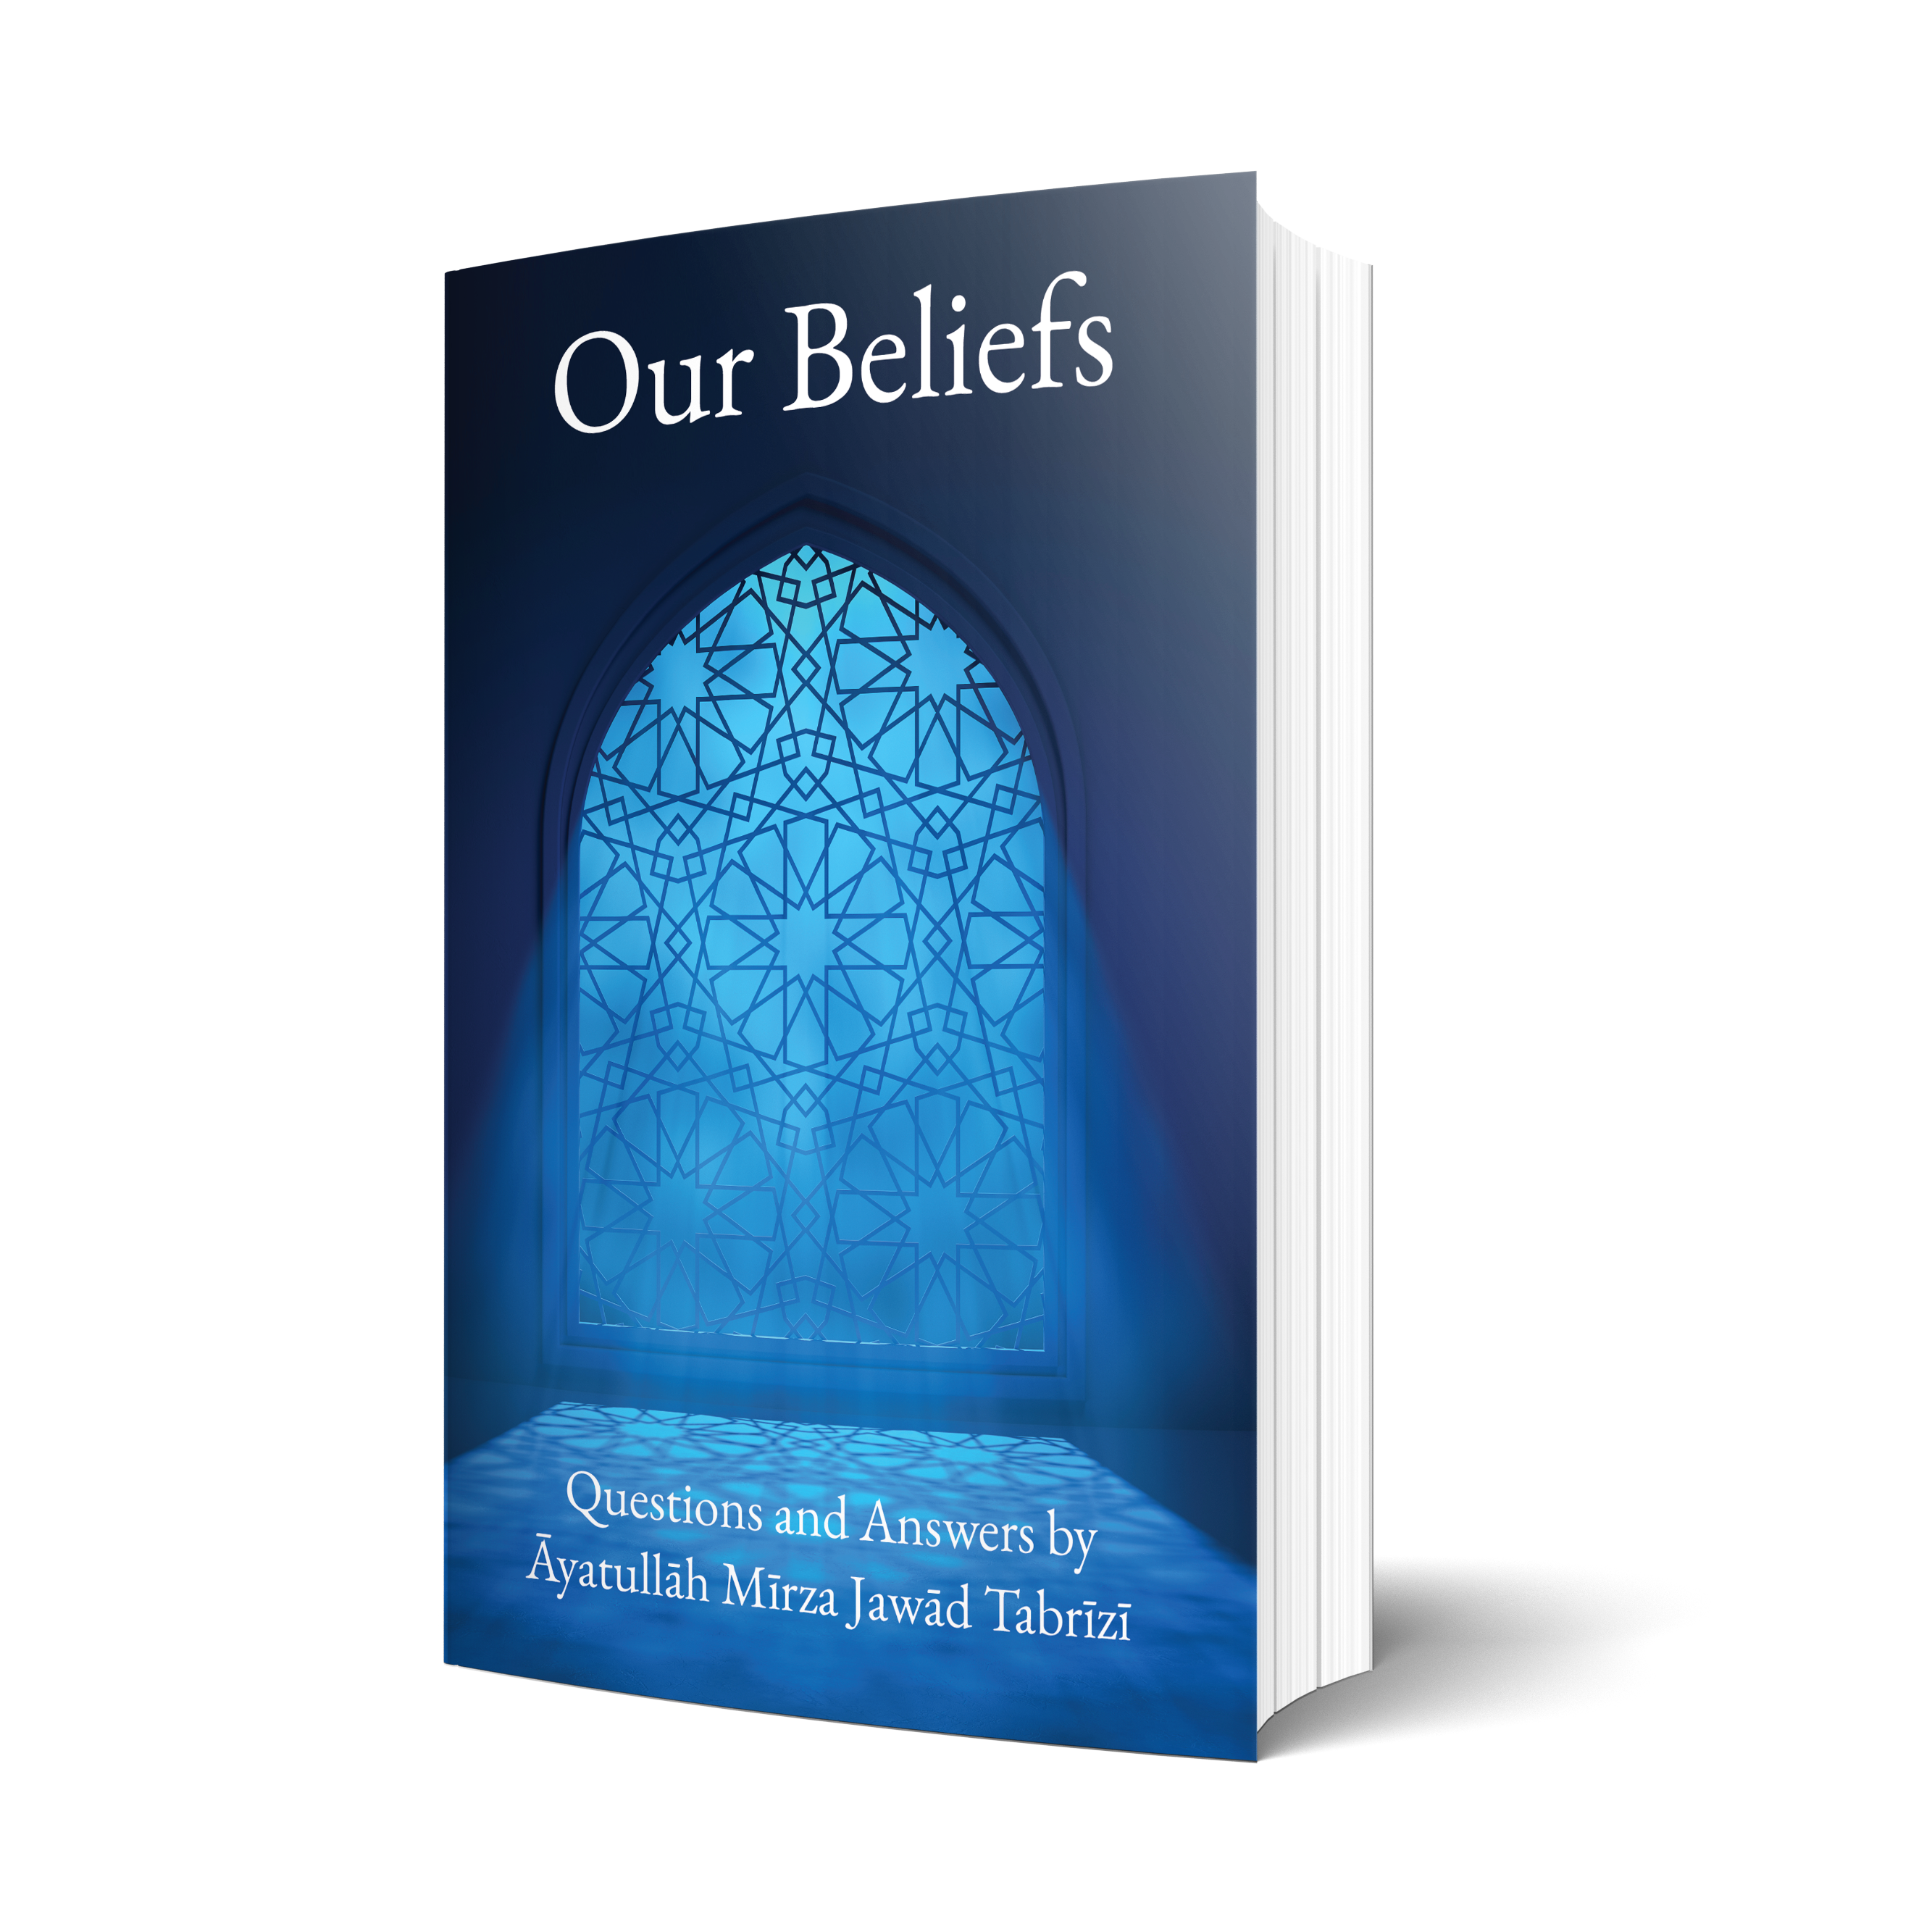 Our Beliefs: Questions and Answers by Āyatullāh Mīrza Jawād Tabrīzī